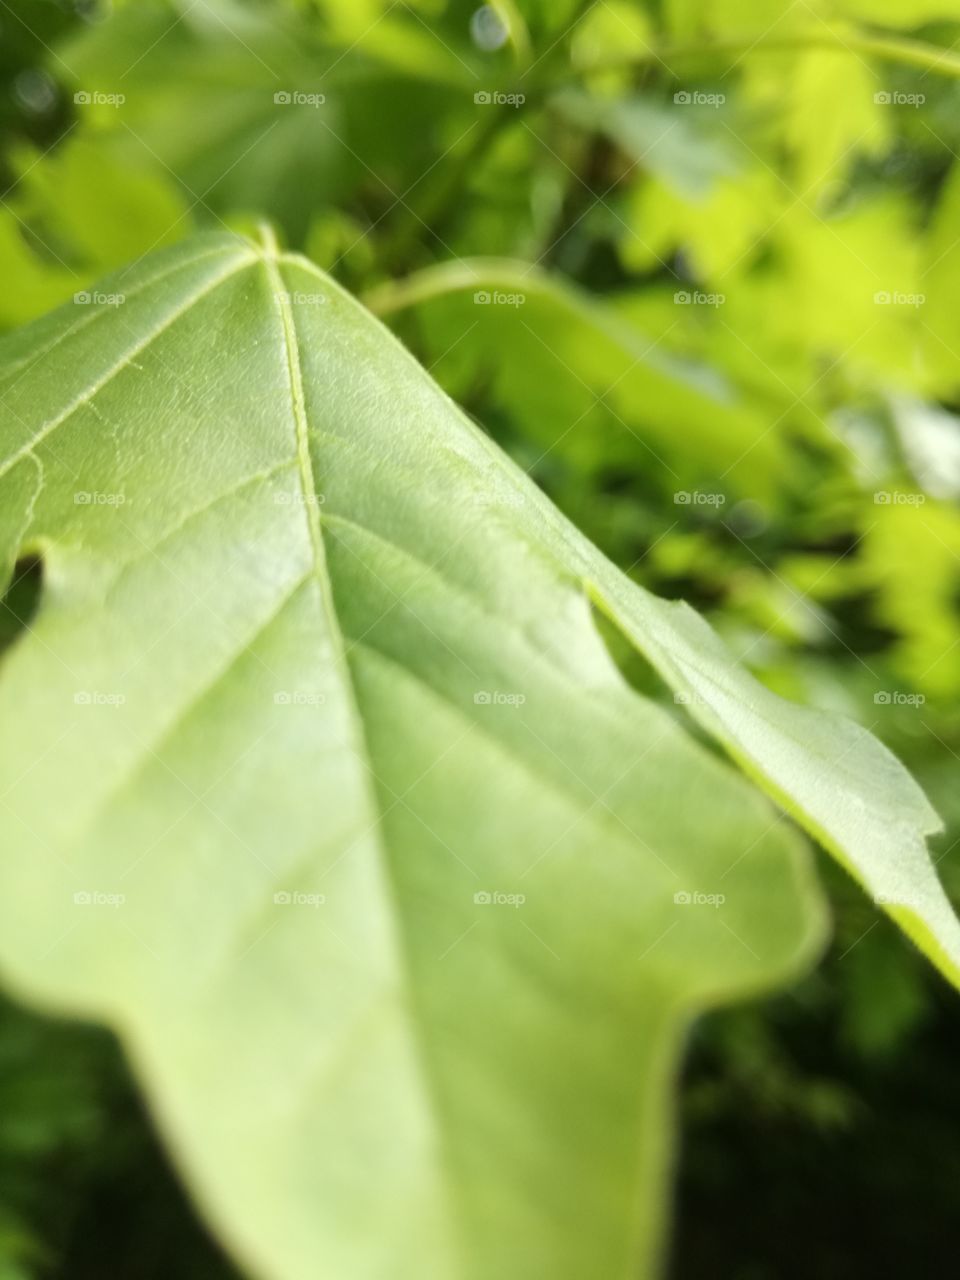 Beautifully green leaf shot close up.